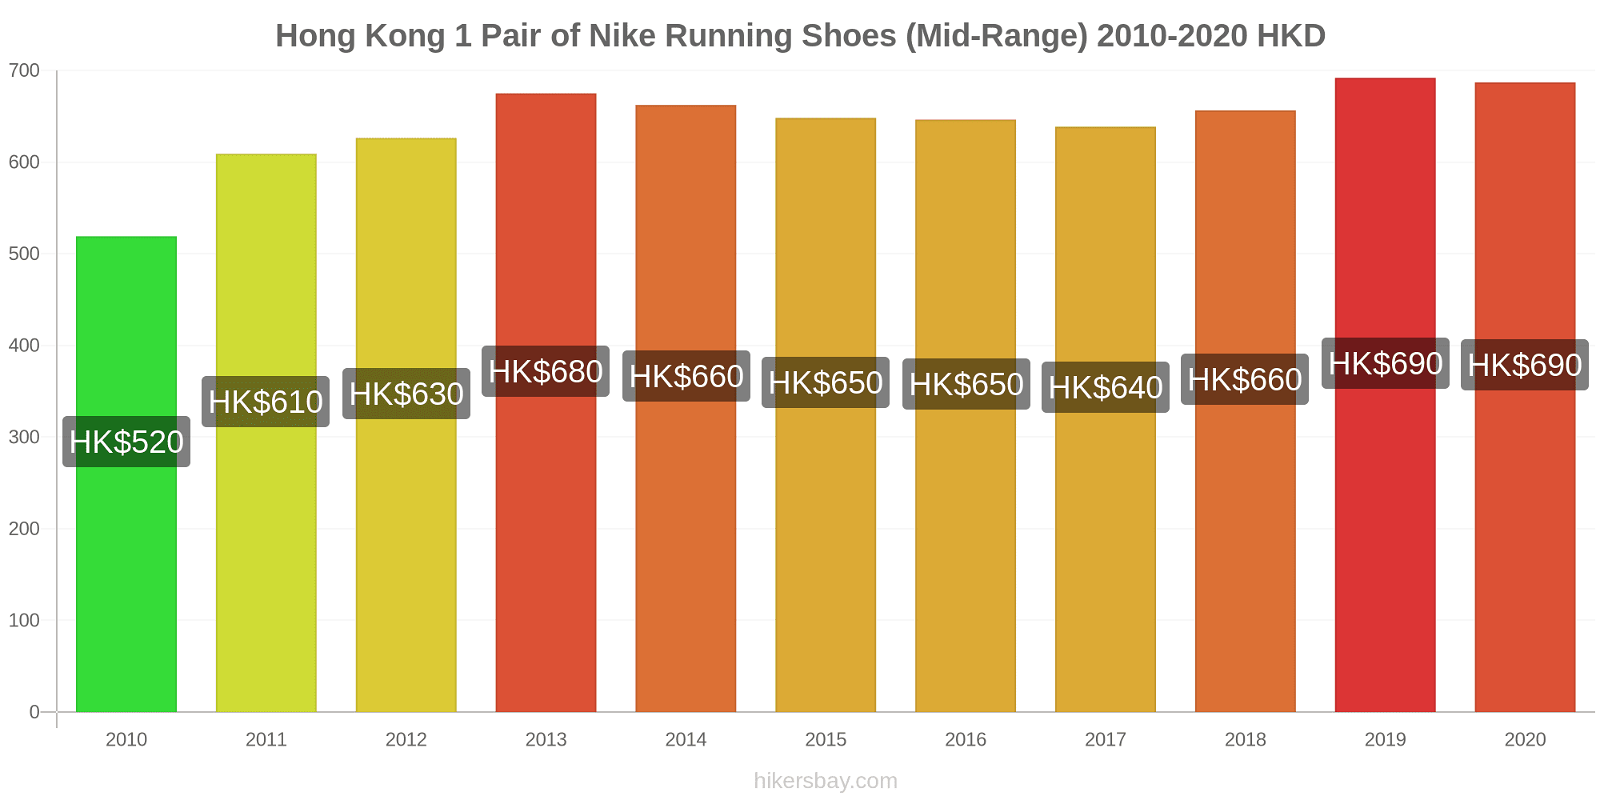 Hong Kong price changes 1 Pair of Nike Running Shoes (Mid-Range) hikersbay.com